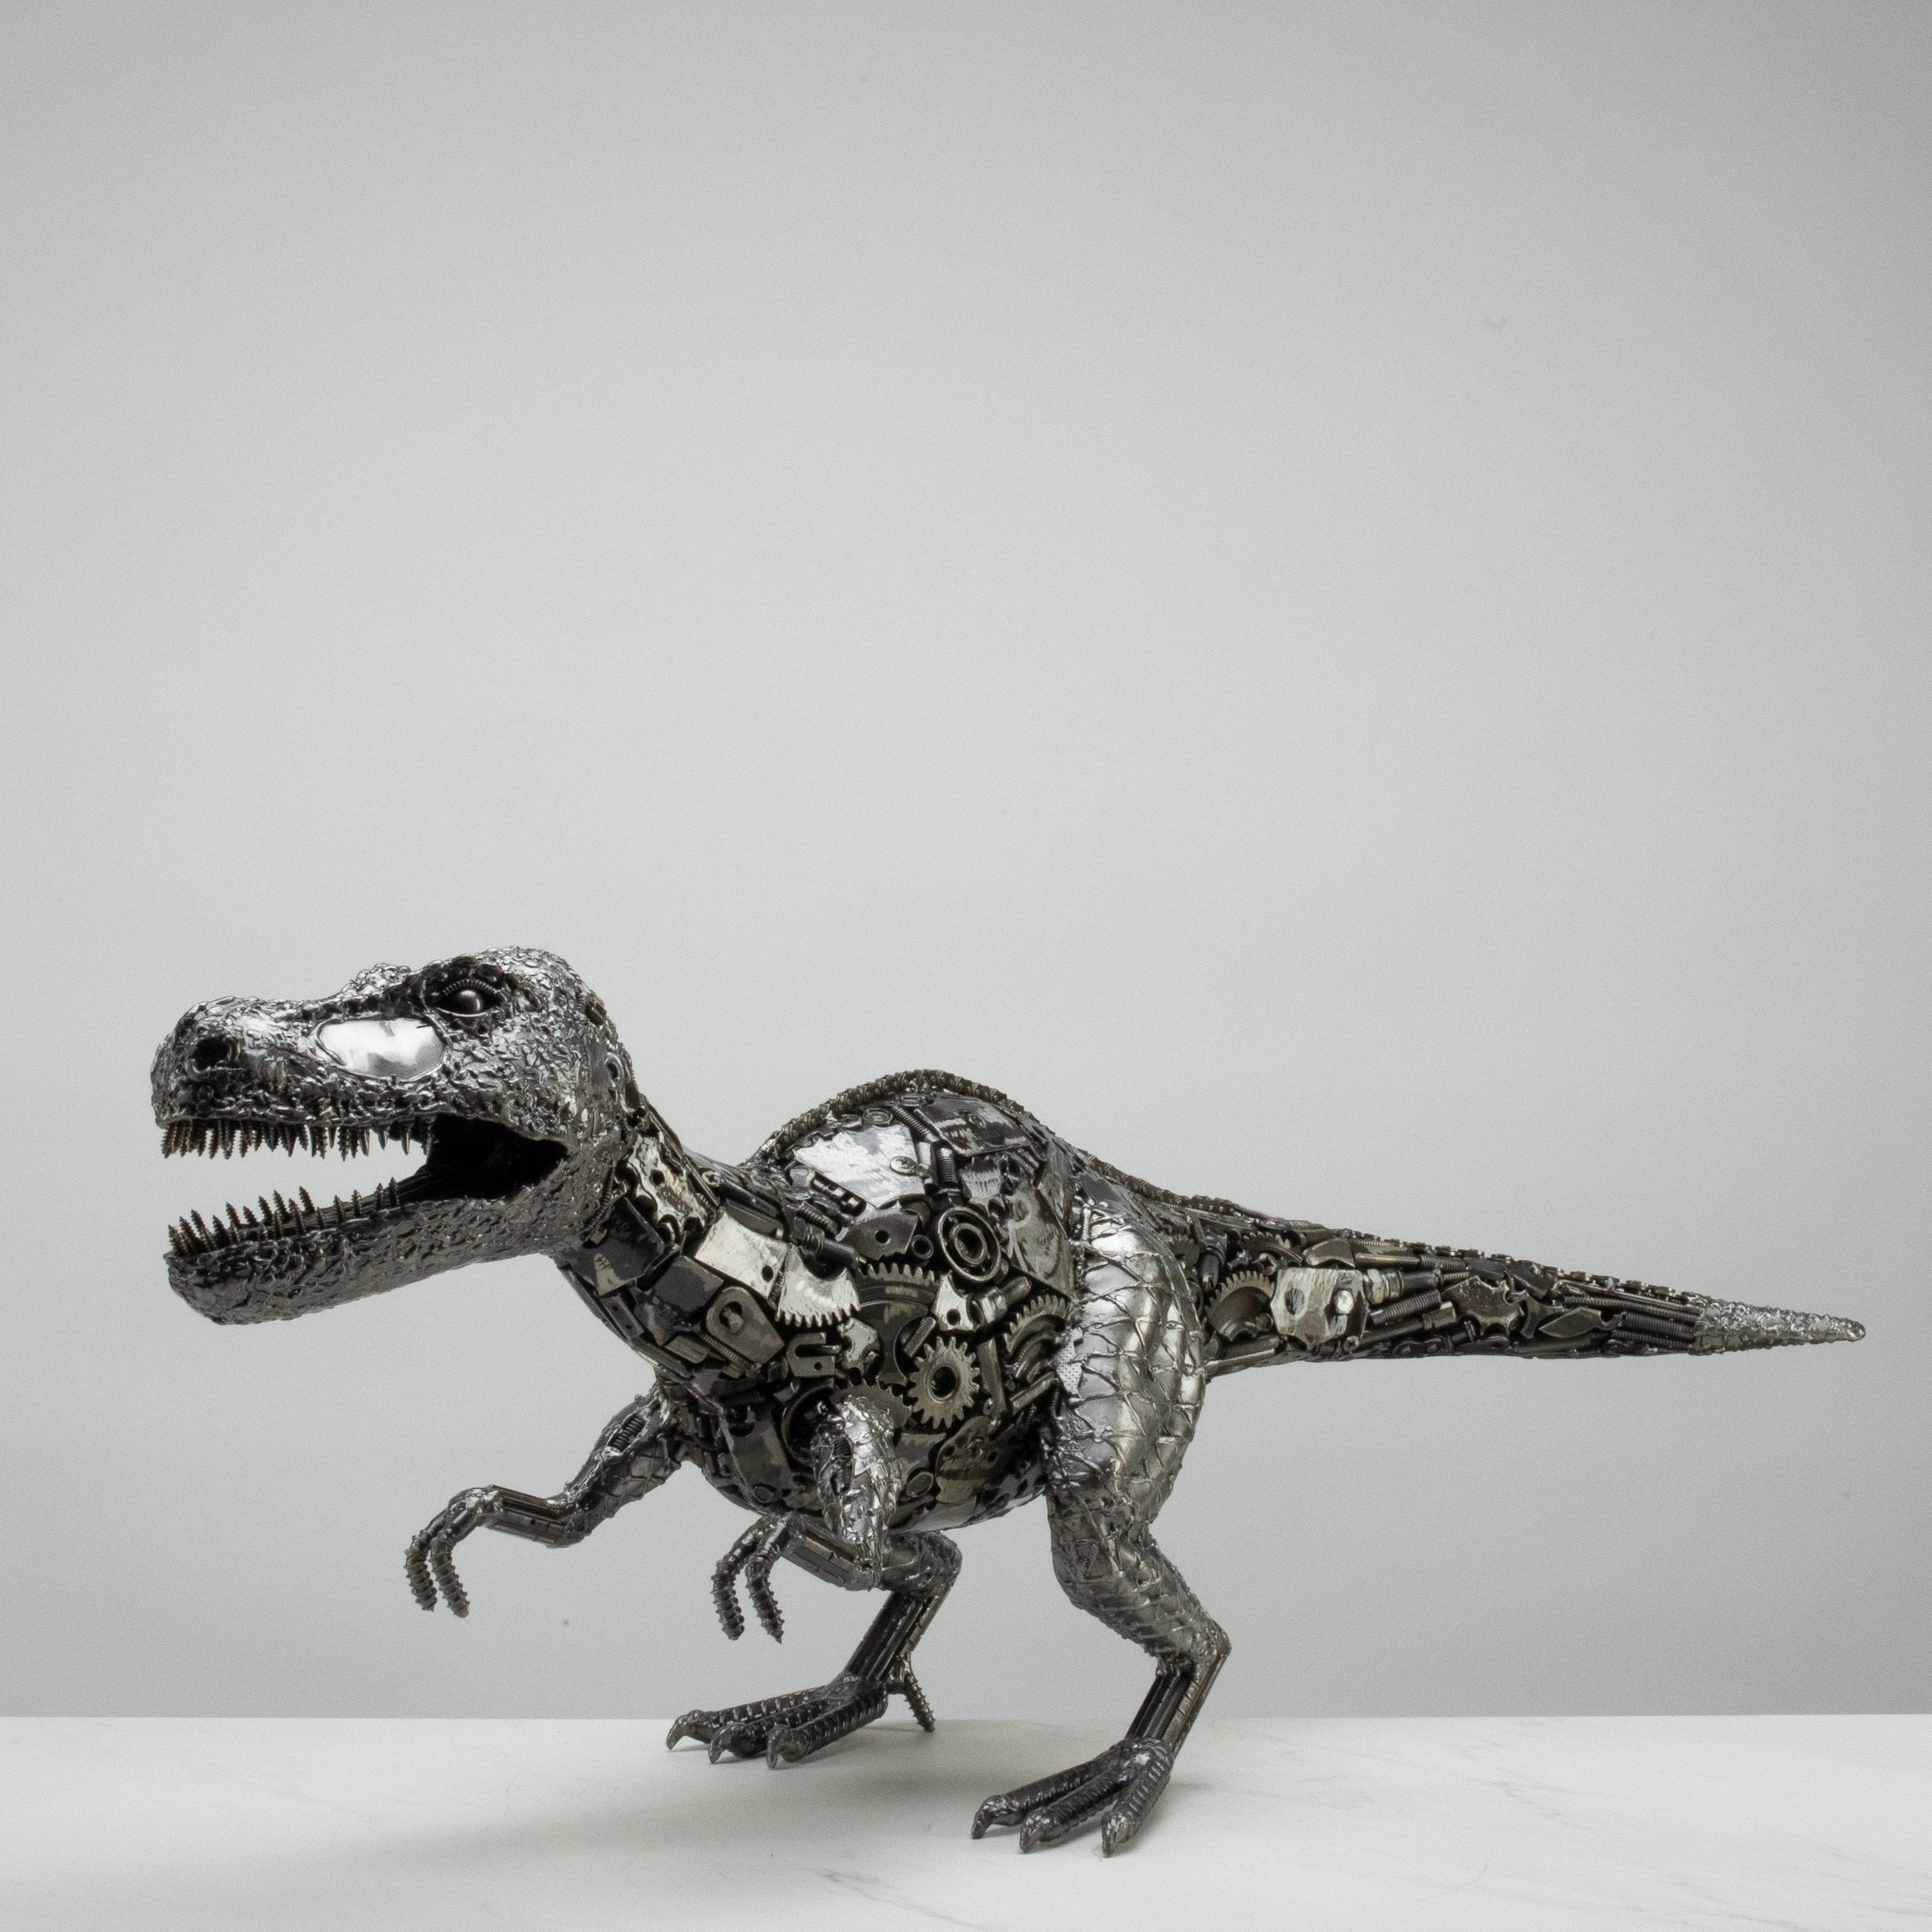 KALIFANO Recycled Metal Art 34" T-Rex Recycled Metal Art Sculpture RMS-TREX85x40-PK